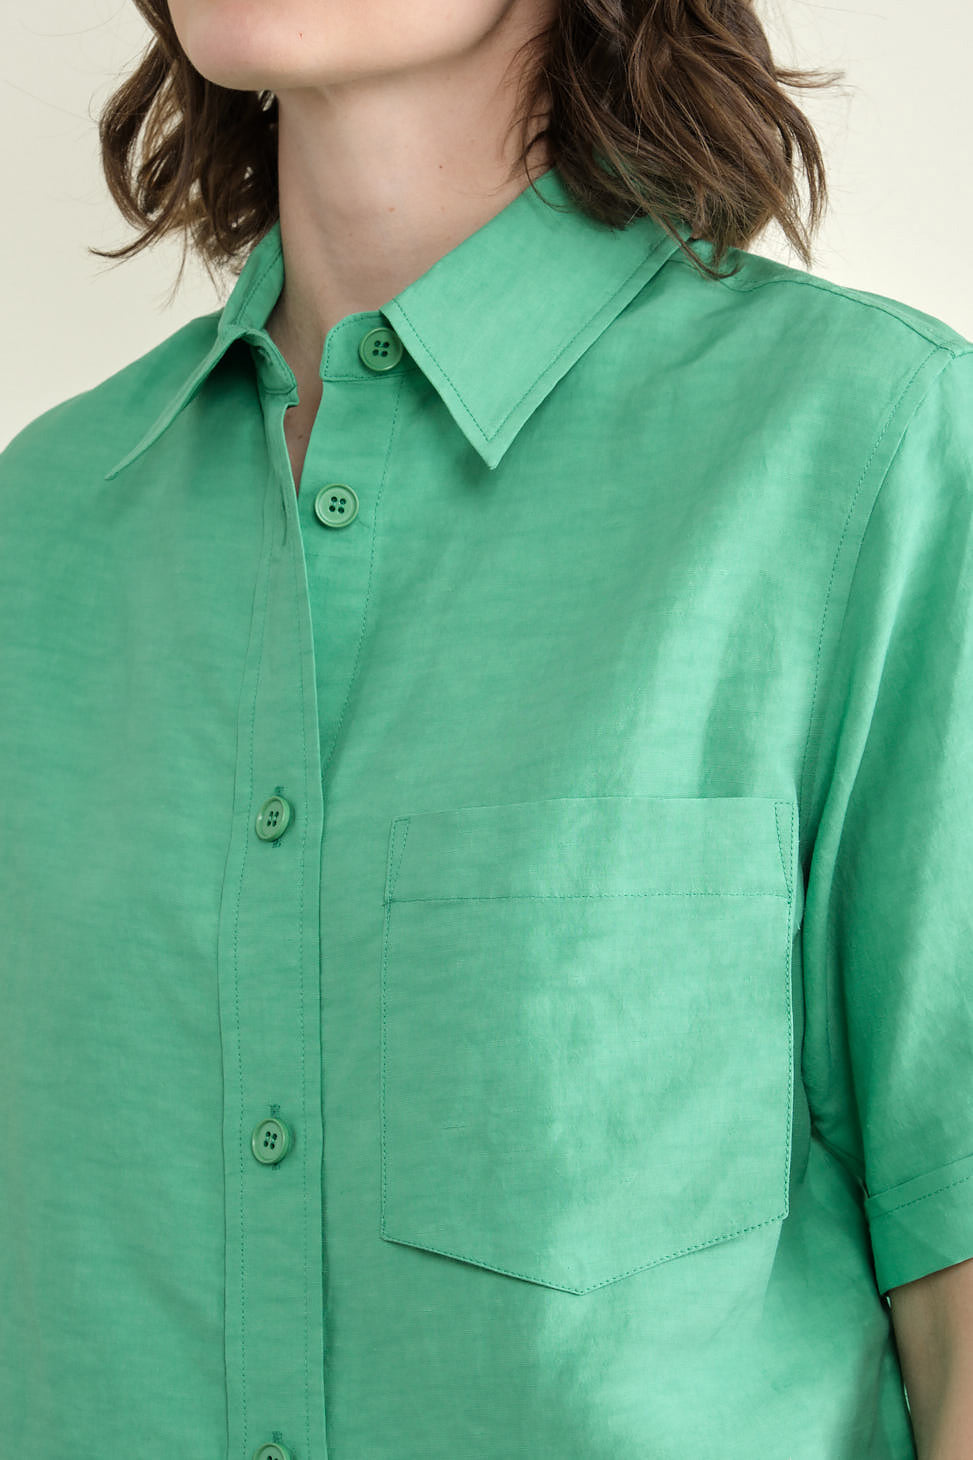 Pocket on Tarusi Short Sleeve Shirt in Jade